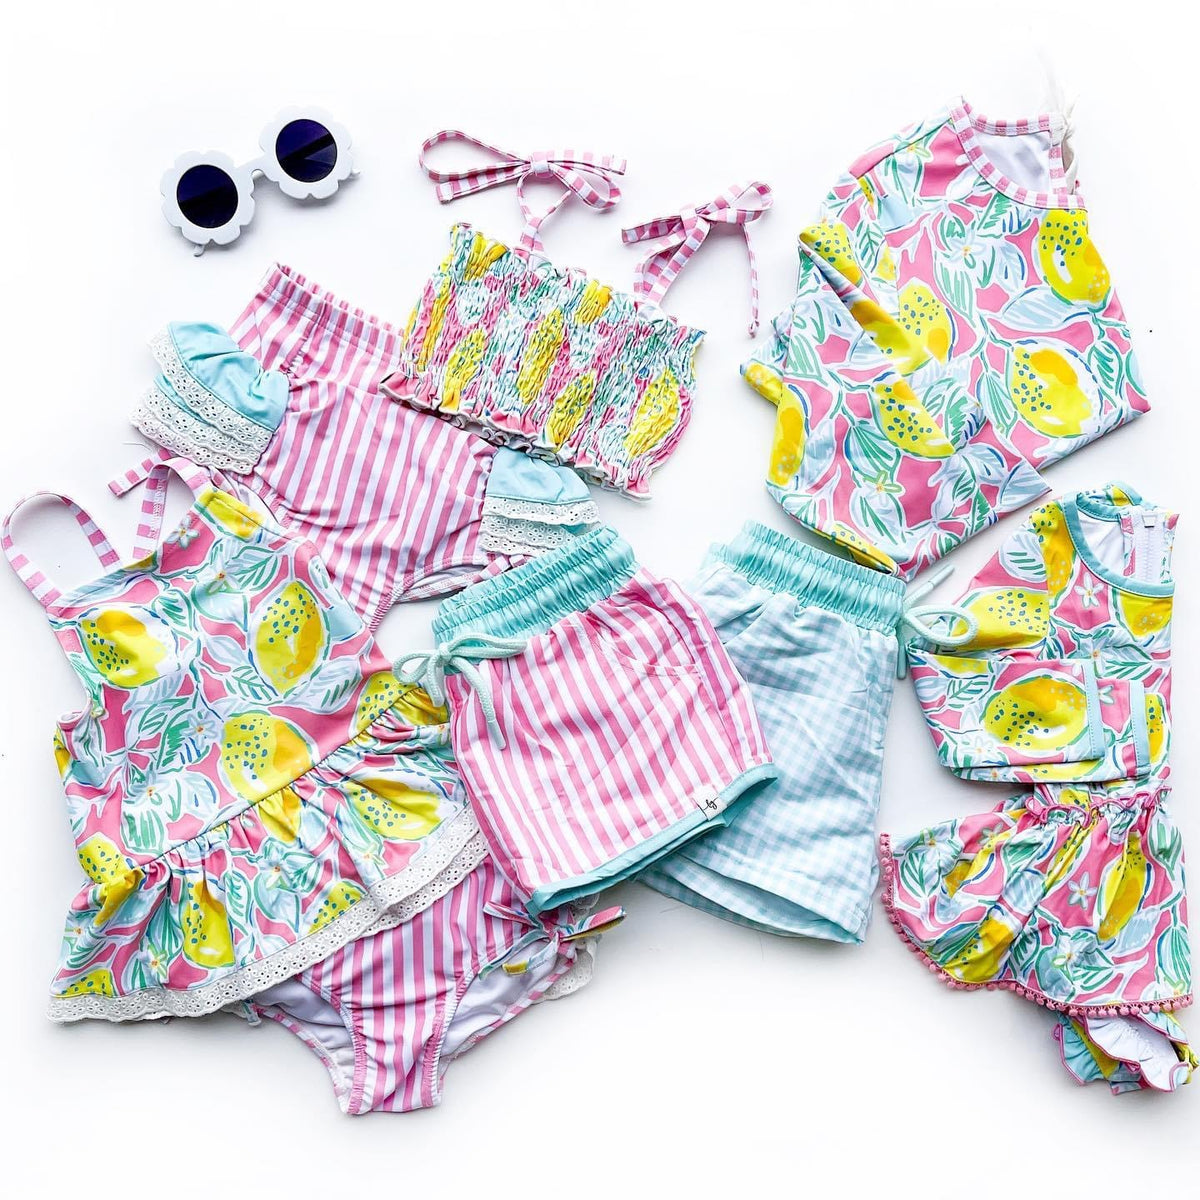 Boys Gingham Swim Shorts - Pretty Pink Lemonade